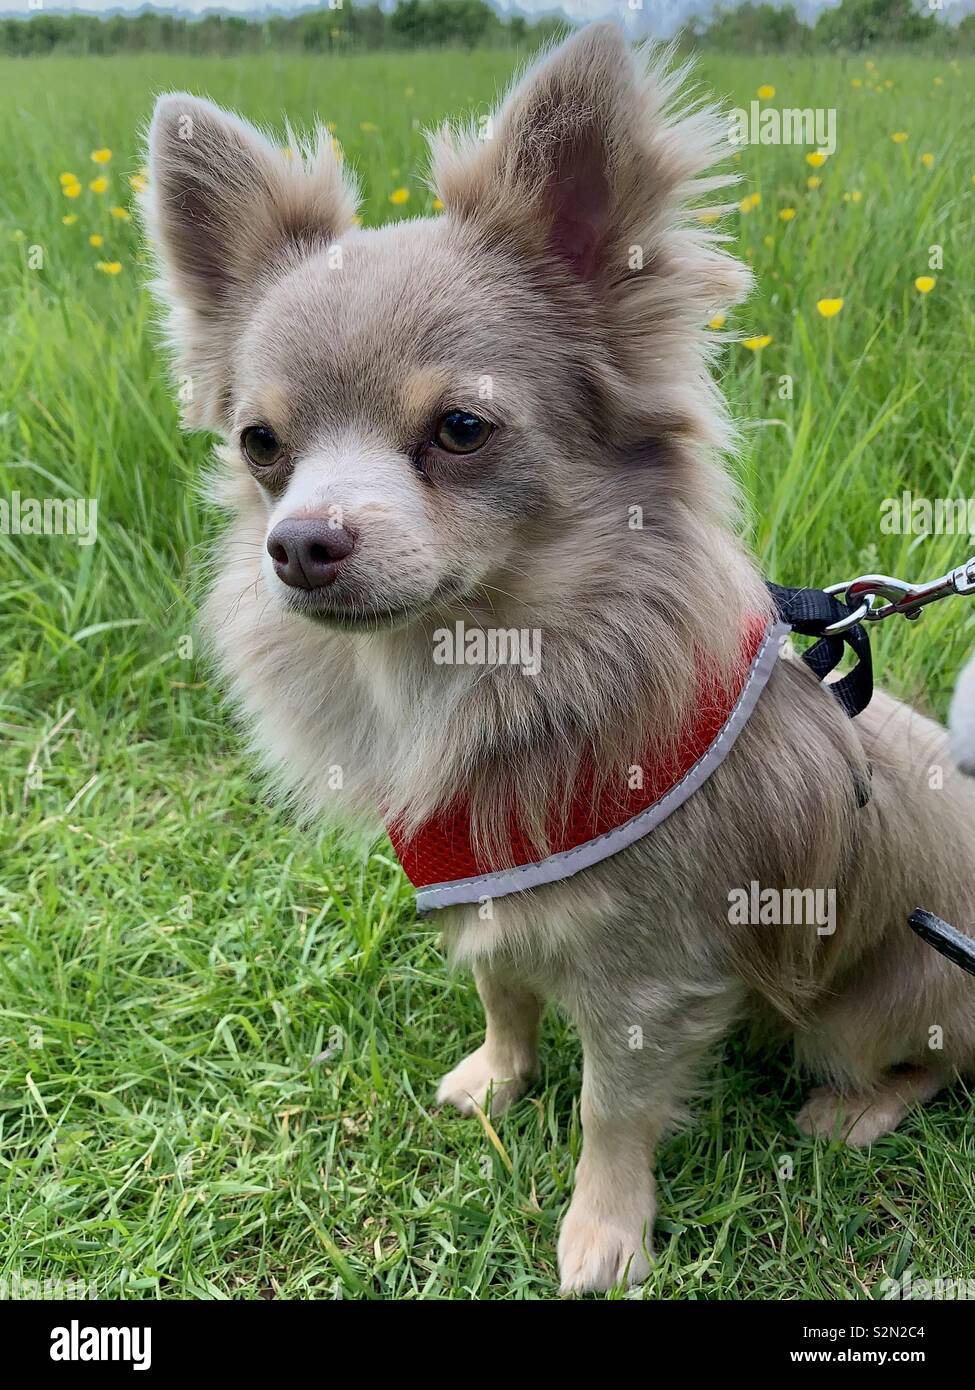 Small chihuahua wearing harness, sitting in buttercup field, UK Stock Photo